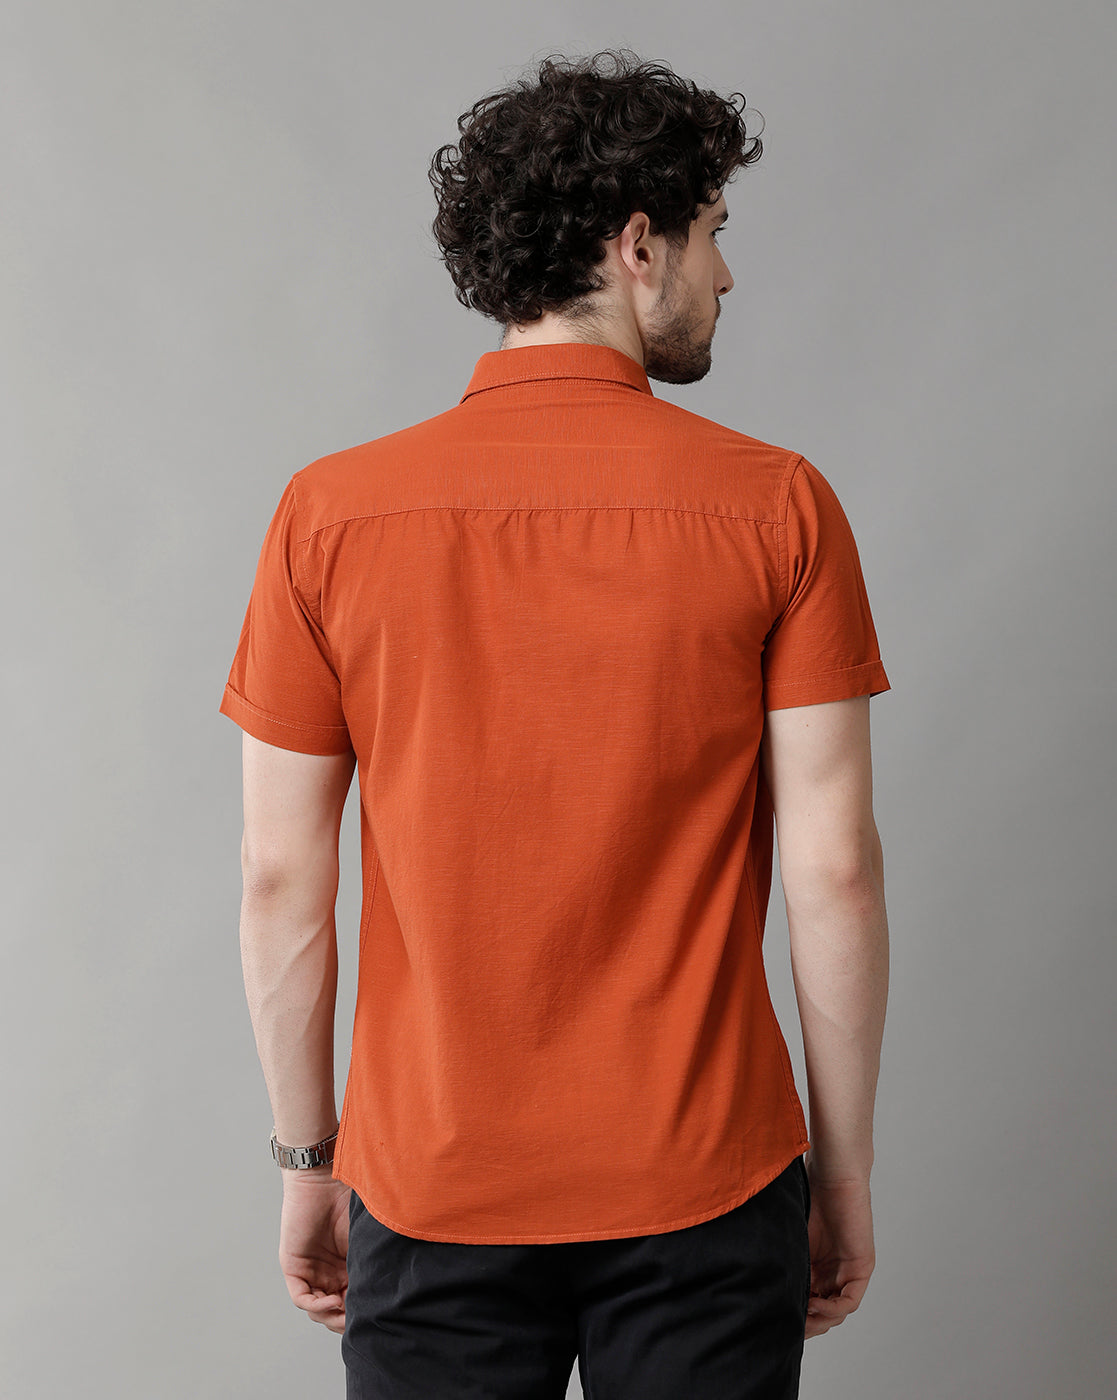 Marmalade Orange Linen Blend Slim Fit Half Shirt